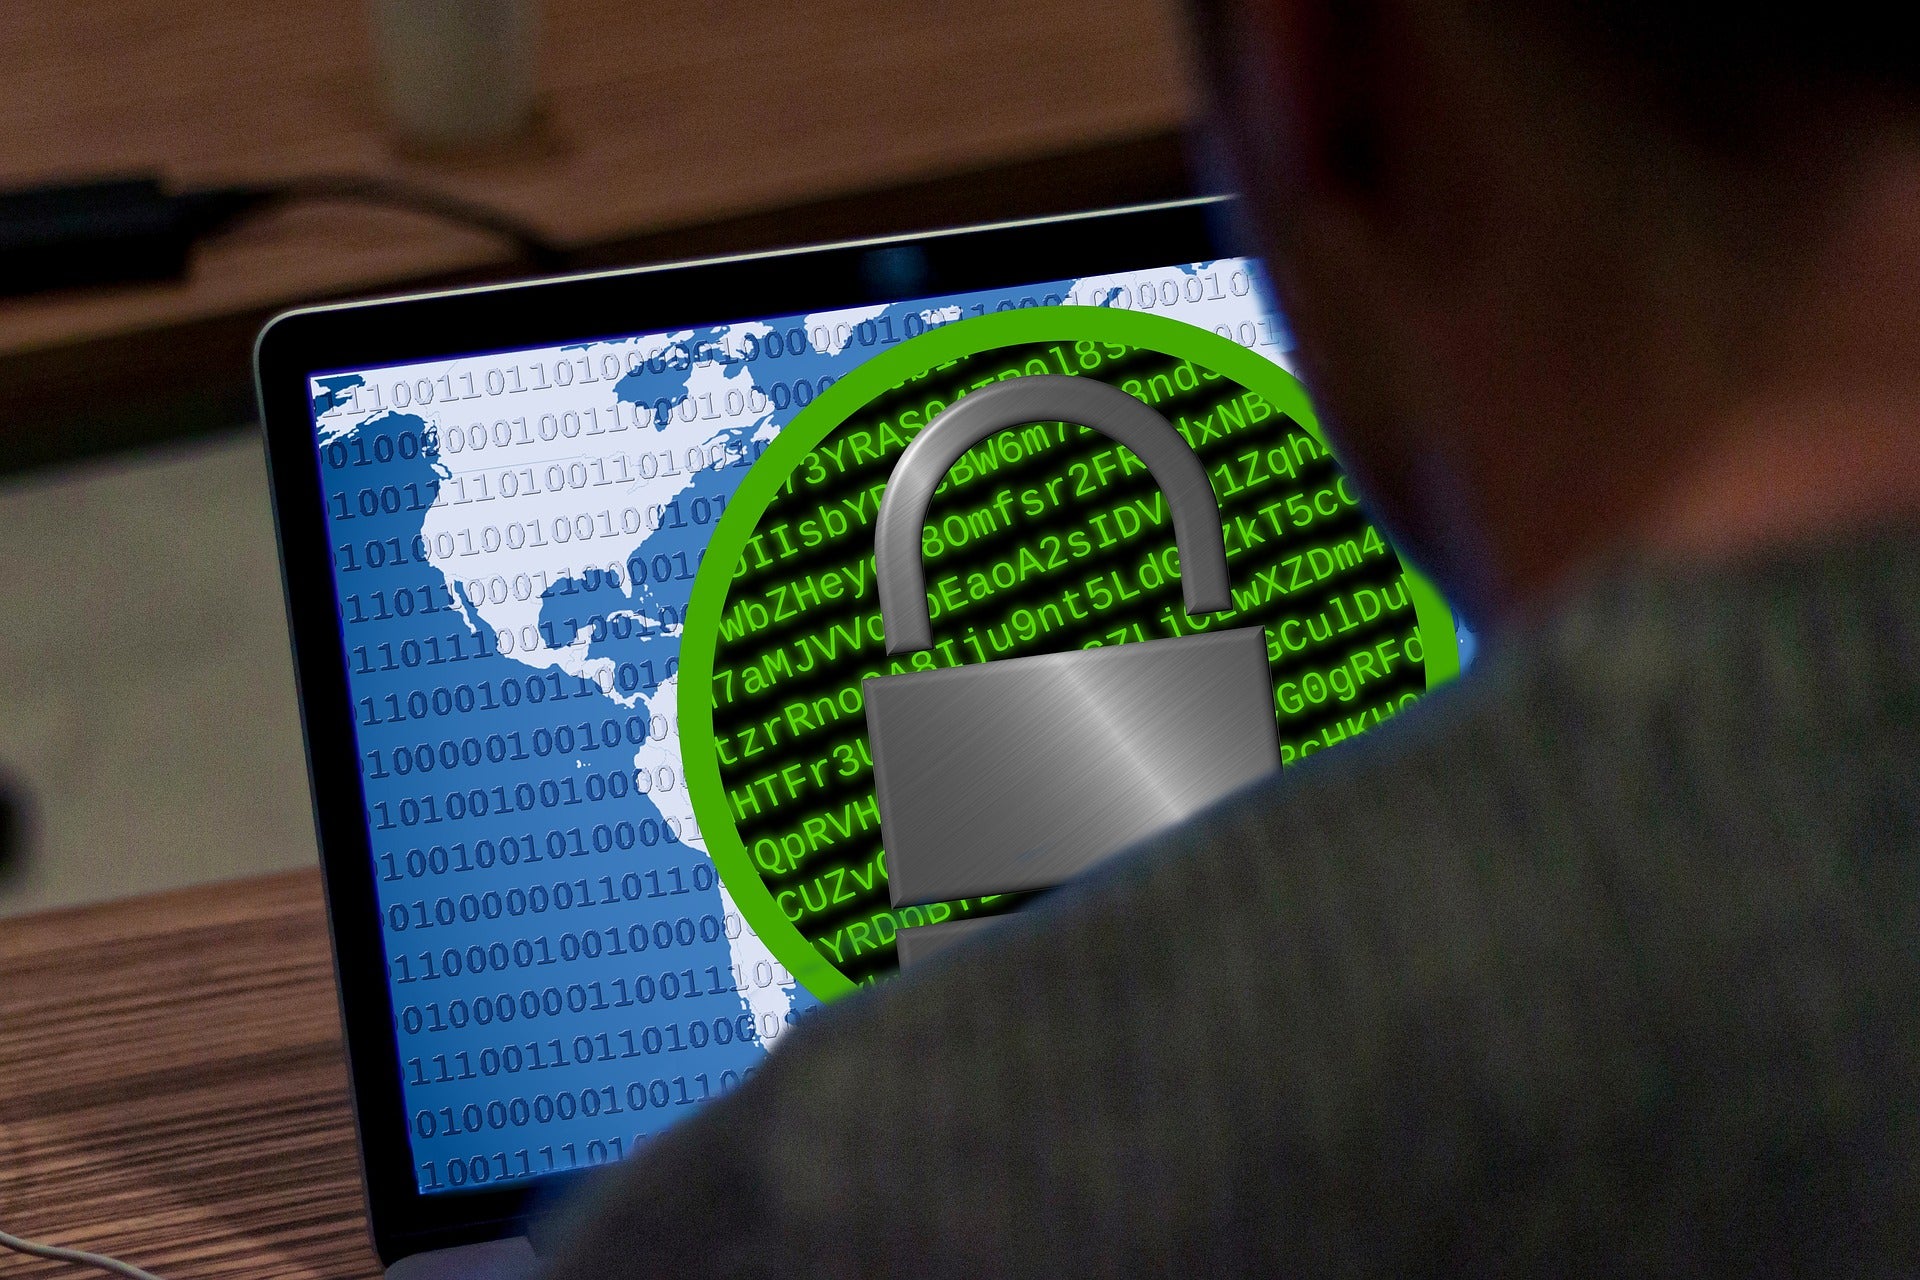 IT Services Giant Conduent Suffers Ransomware Attack, Data Breach